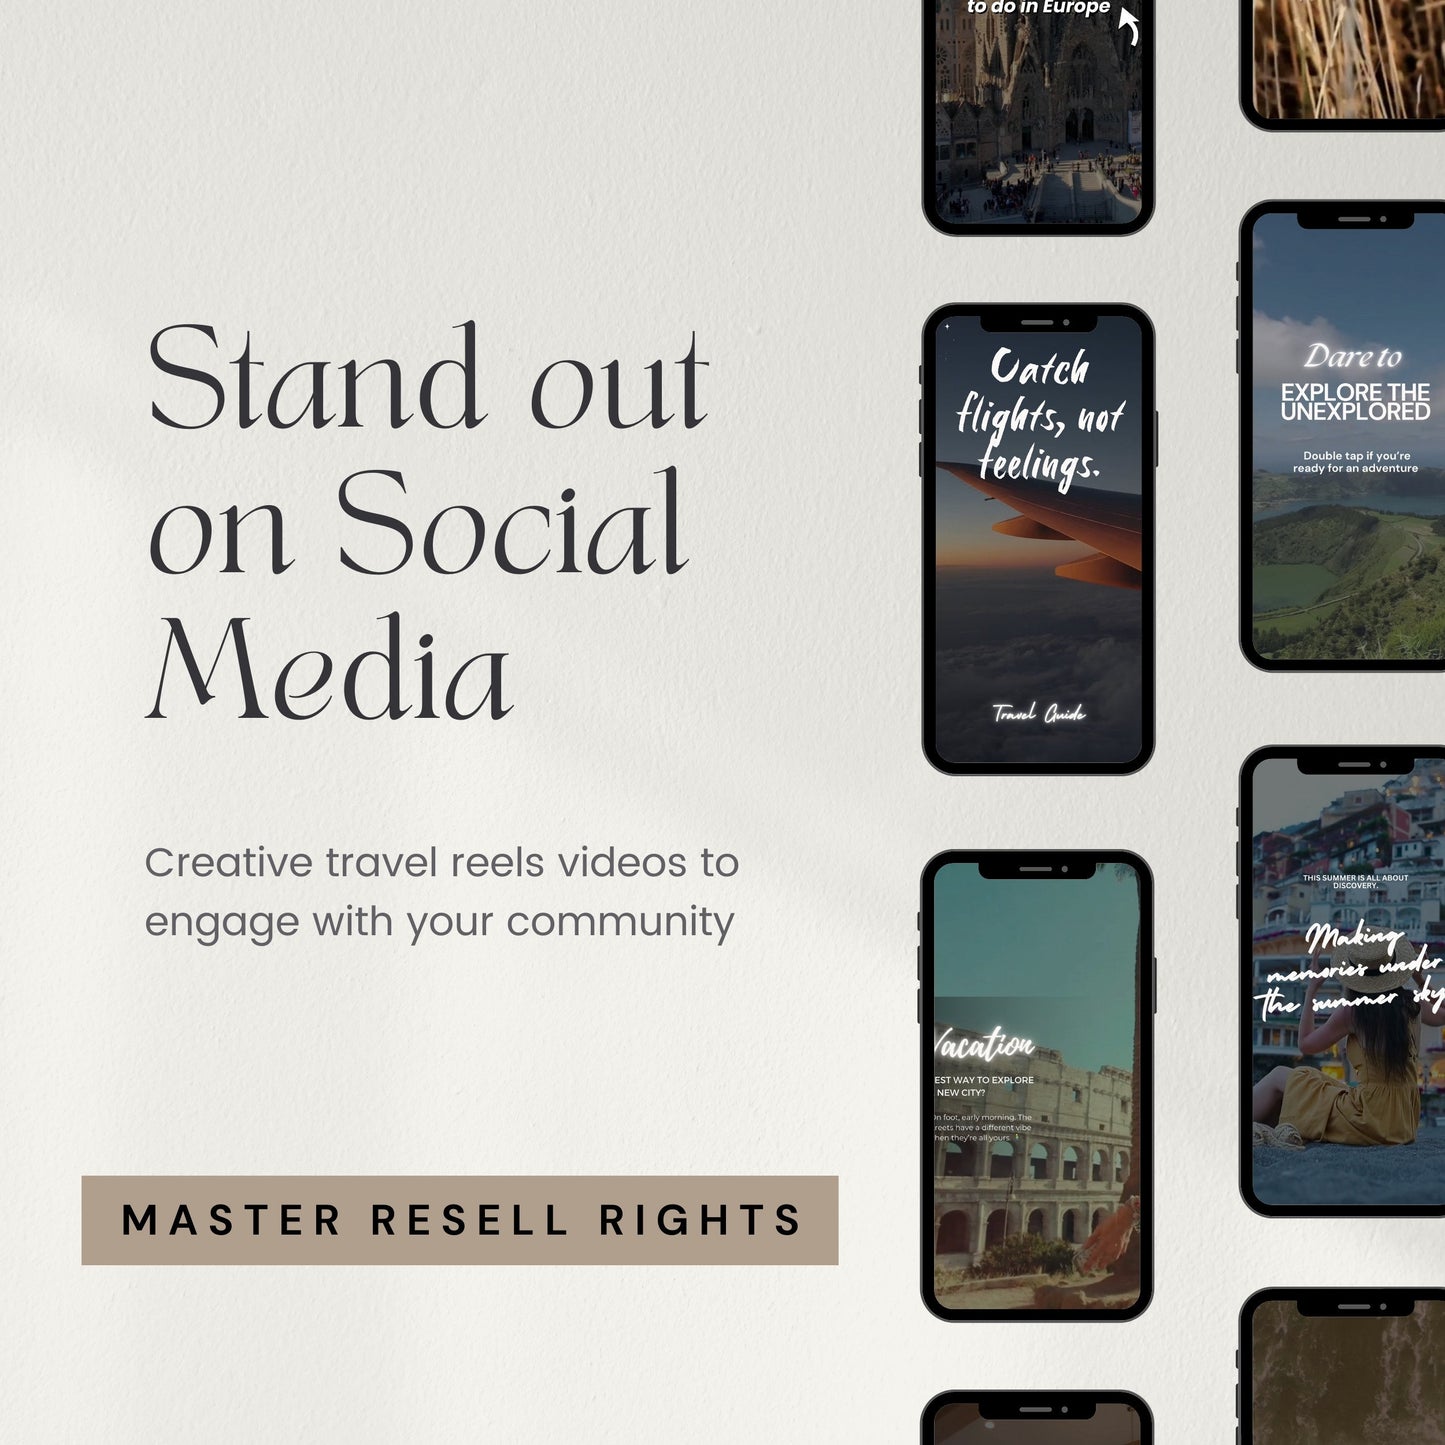 Faceless Instagram Travel Reels PLR Bundle Master Resell Rights- DFY Digital Product